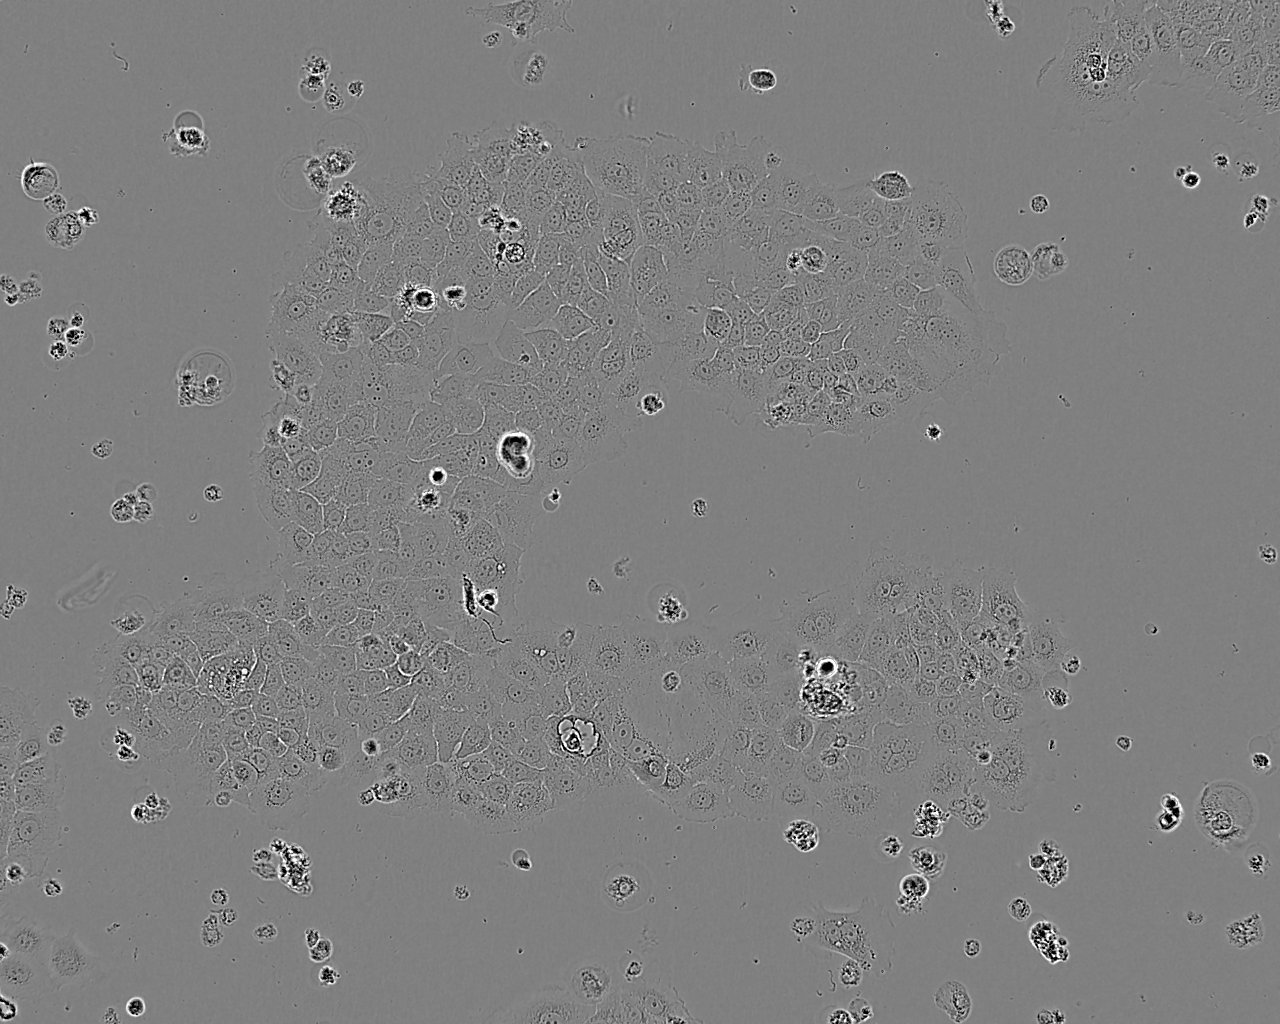 FRTL-5 epithelioid cells大鼠甲状腺细胞系